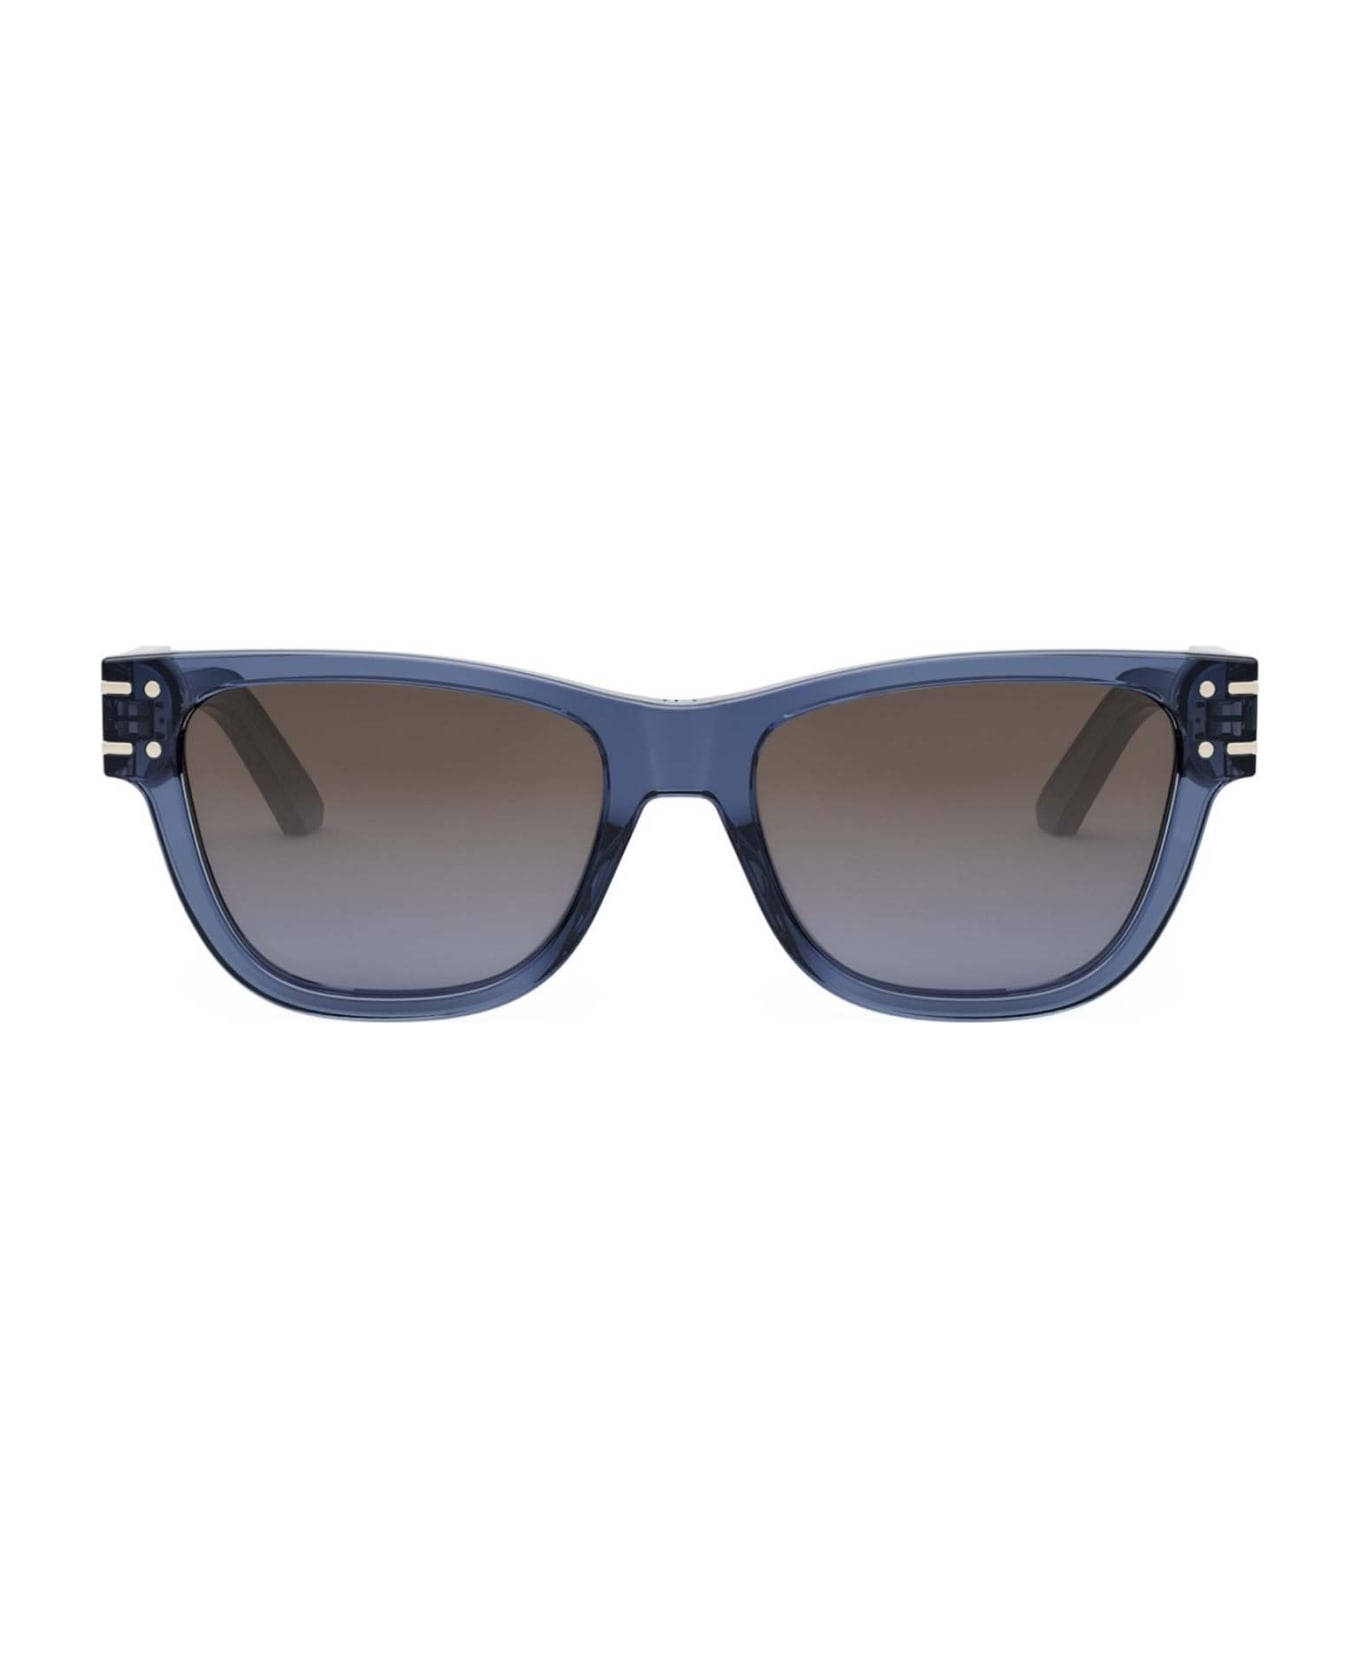 Dior Eyewear Sunglasses - Blu/Marrone sfumata